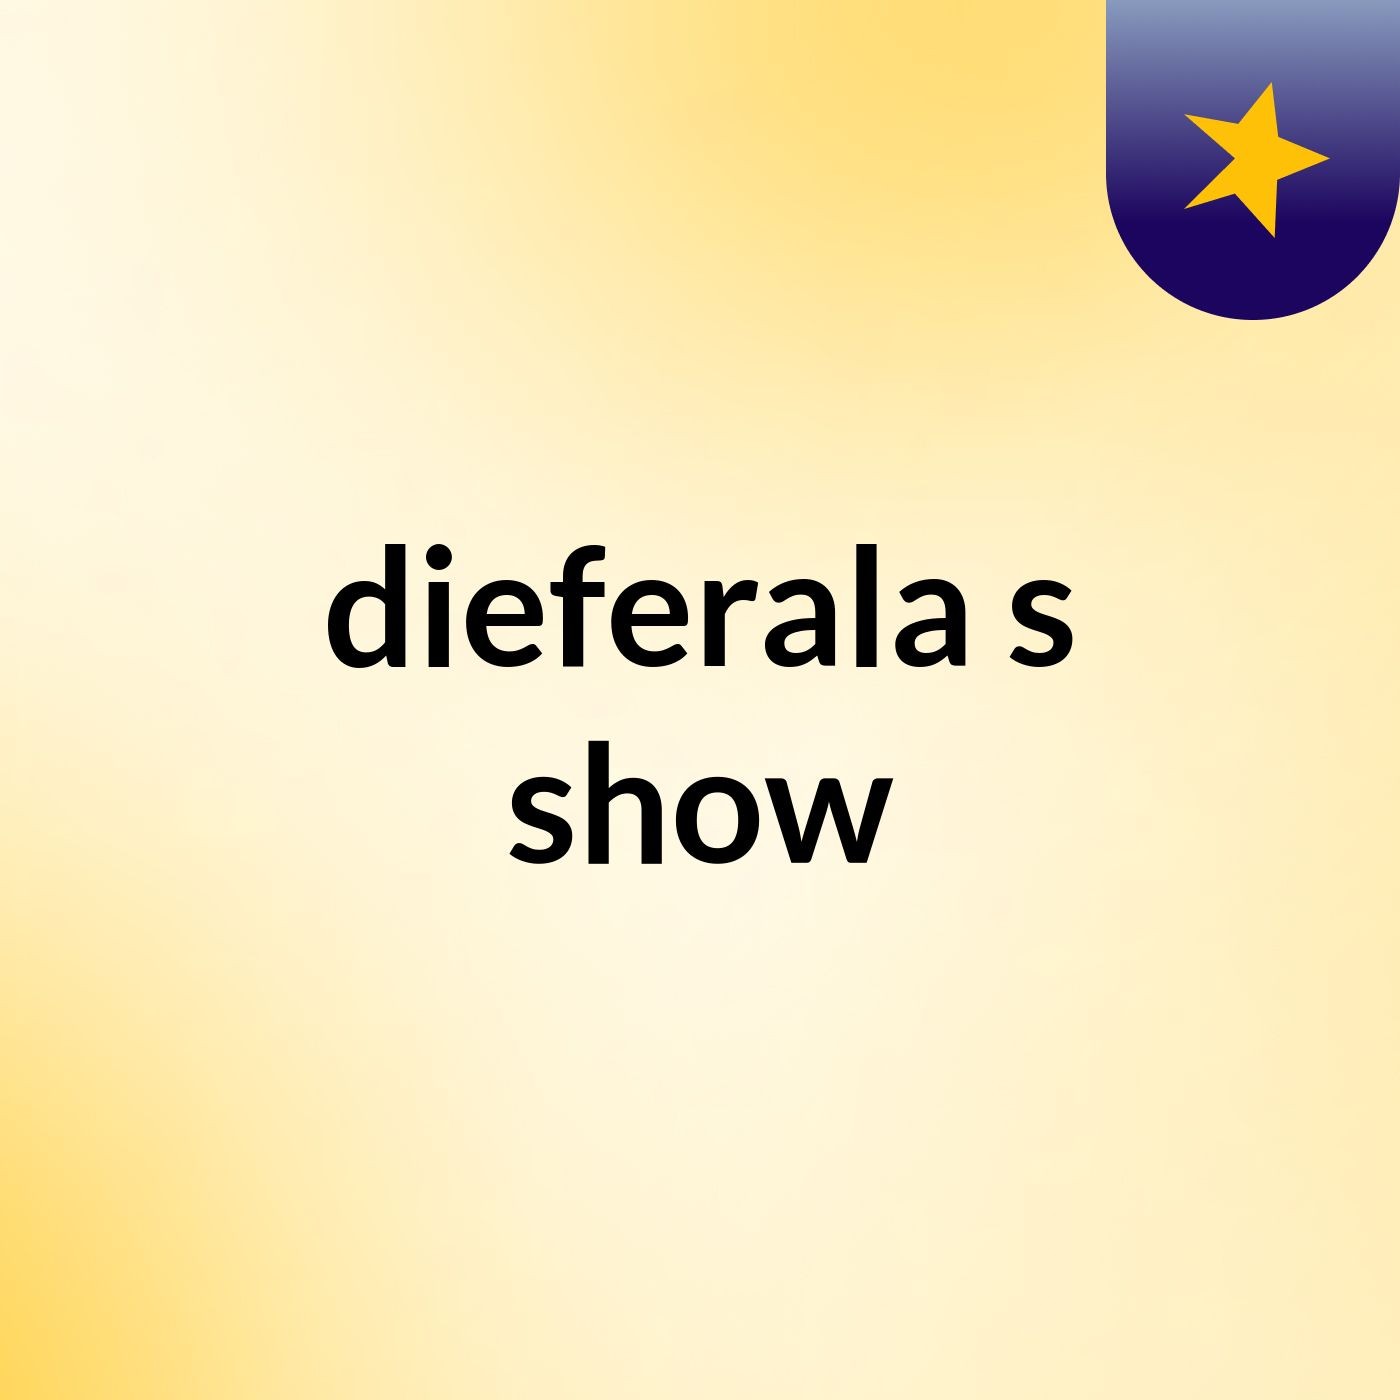 dieferala's show